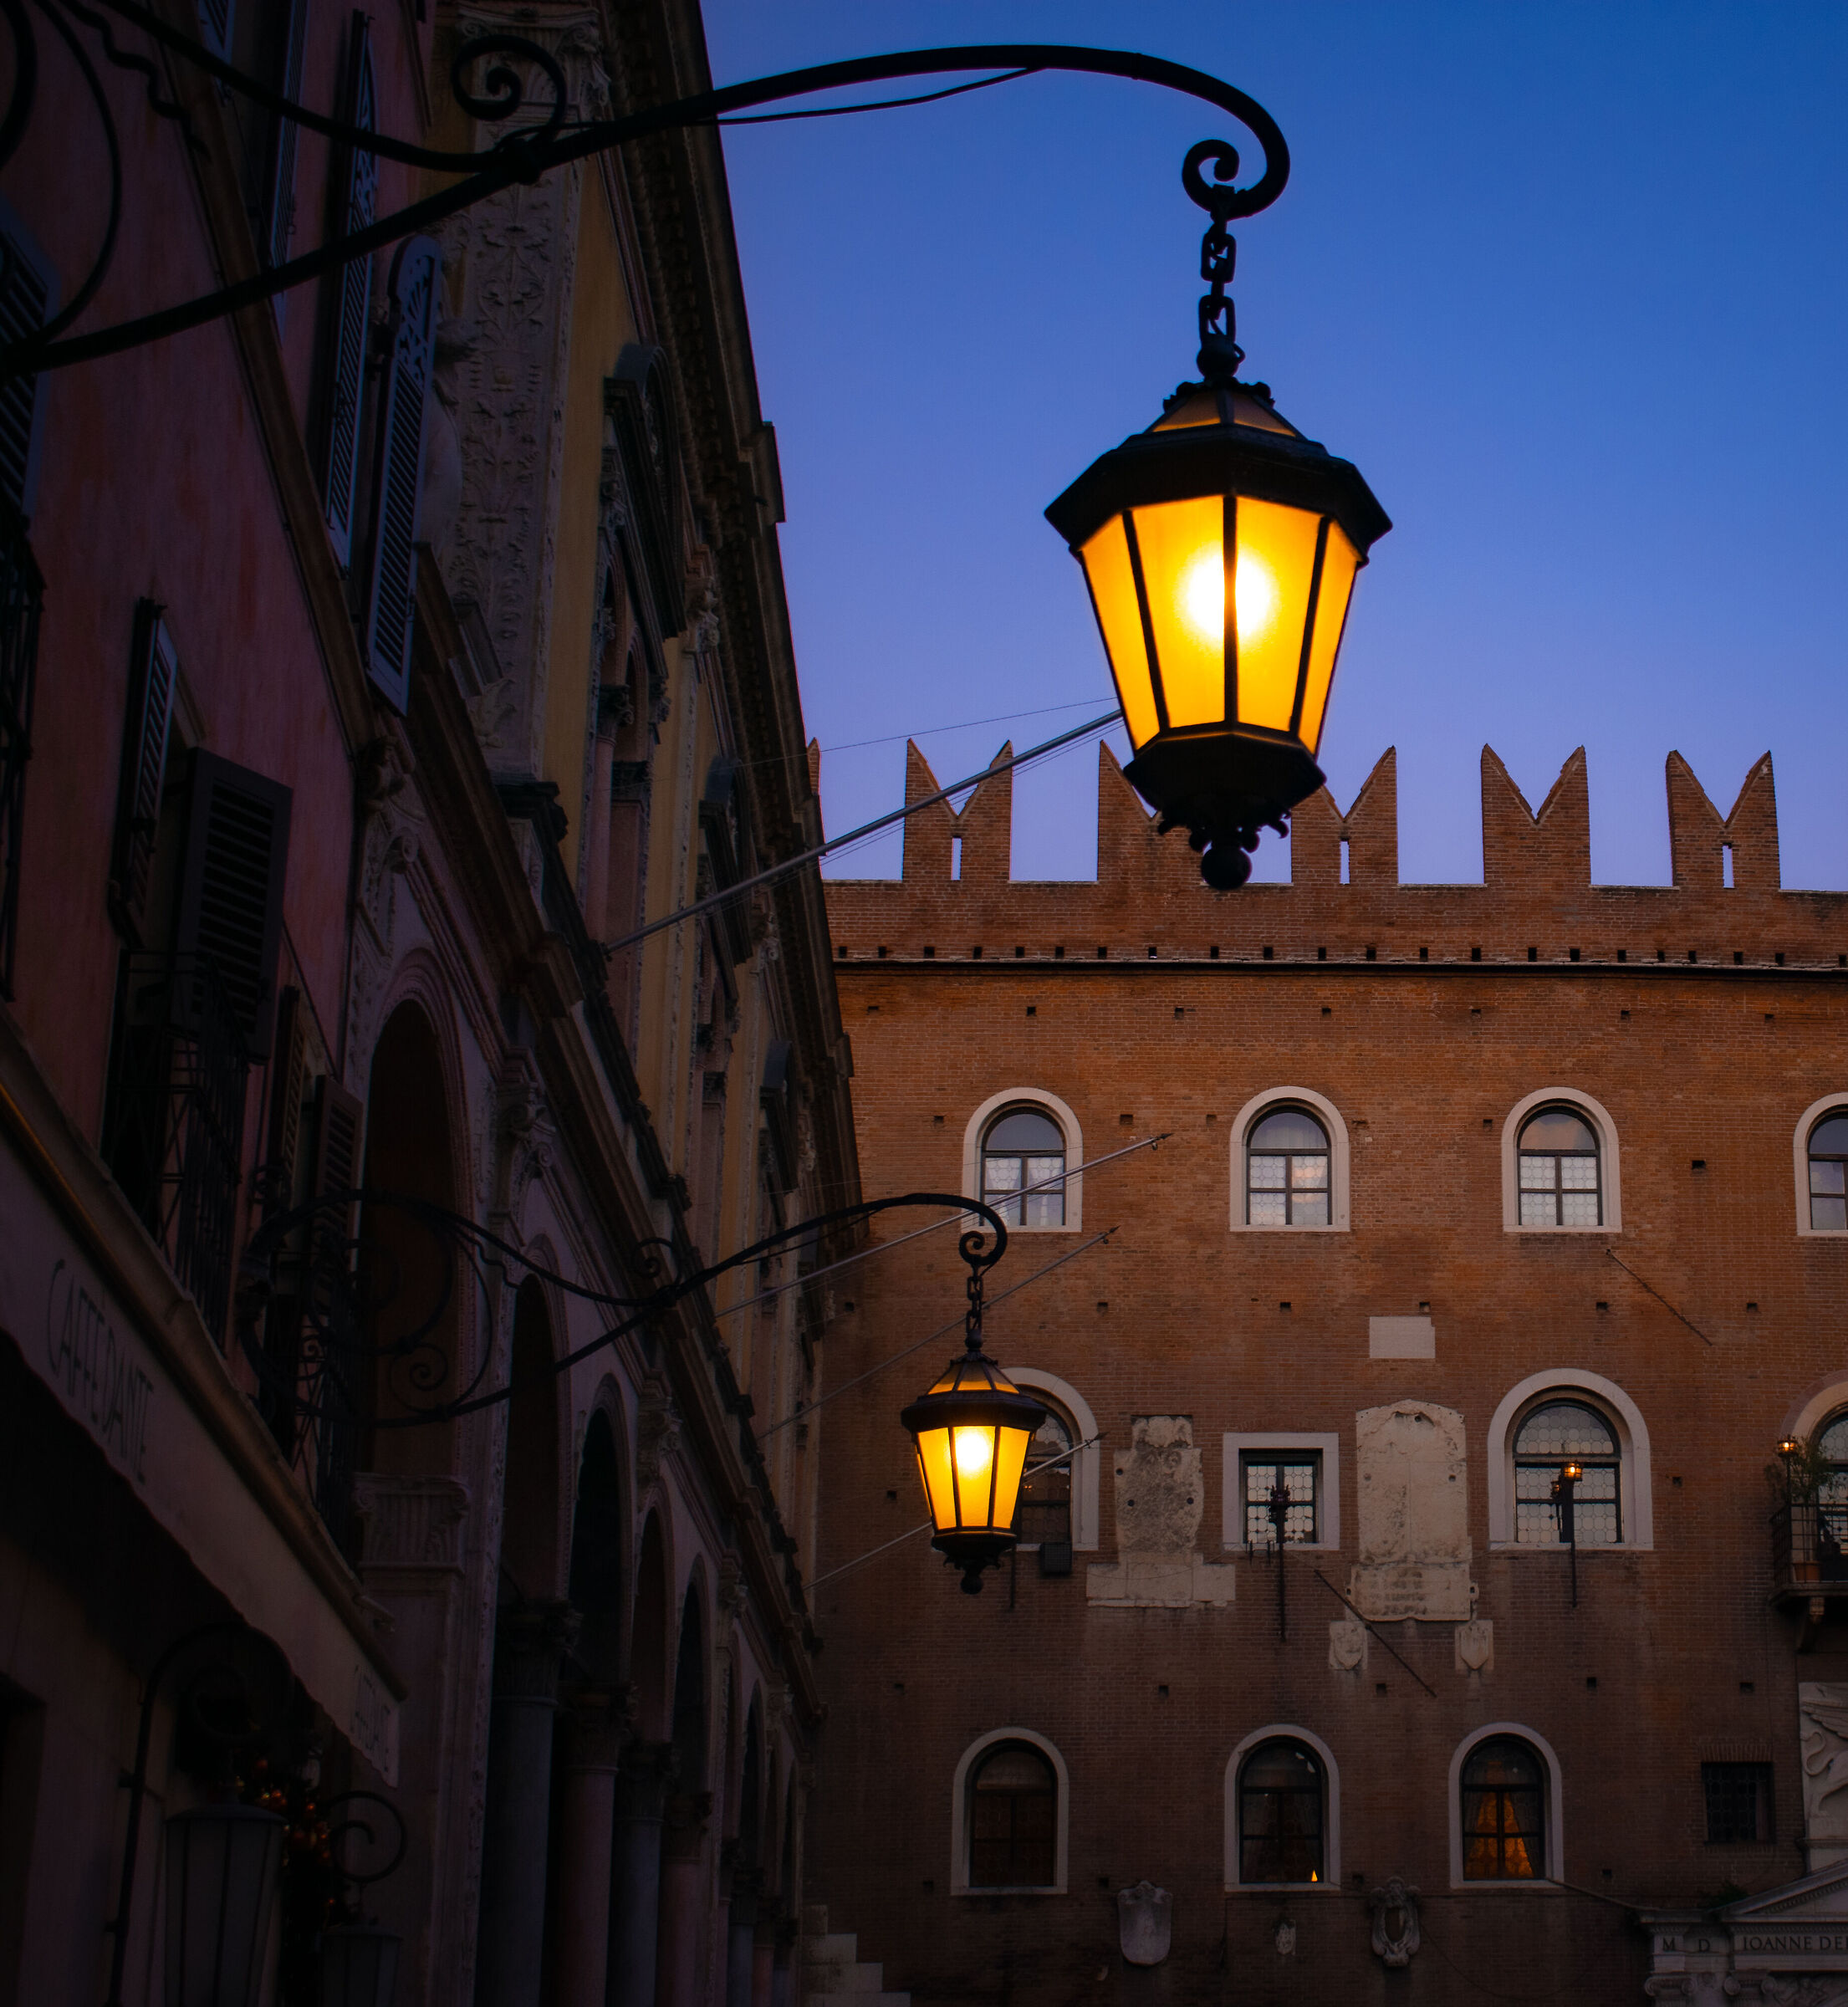 Street lights of Piazza dei Signori...